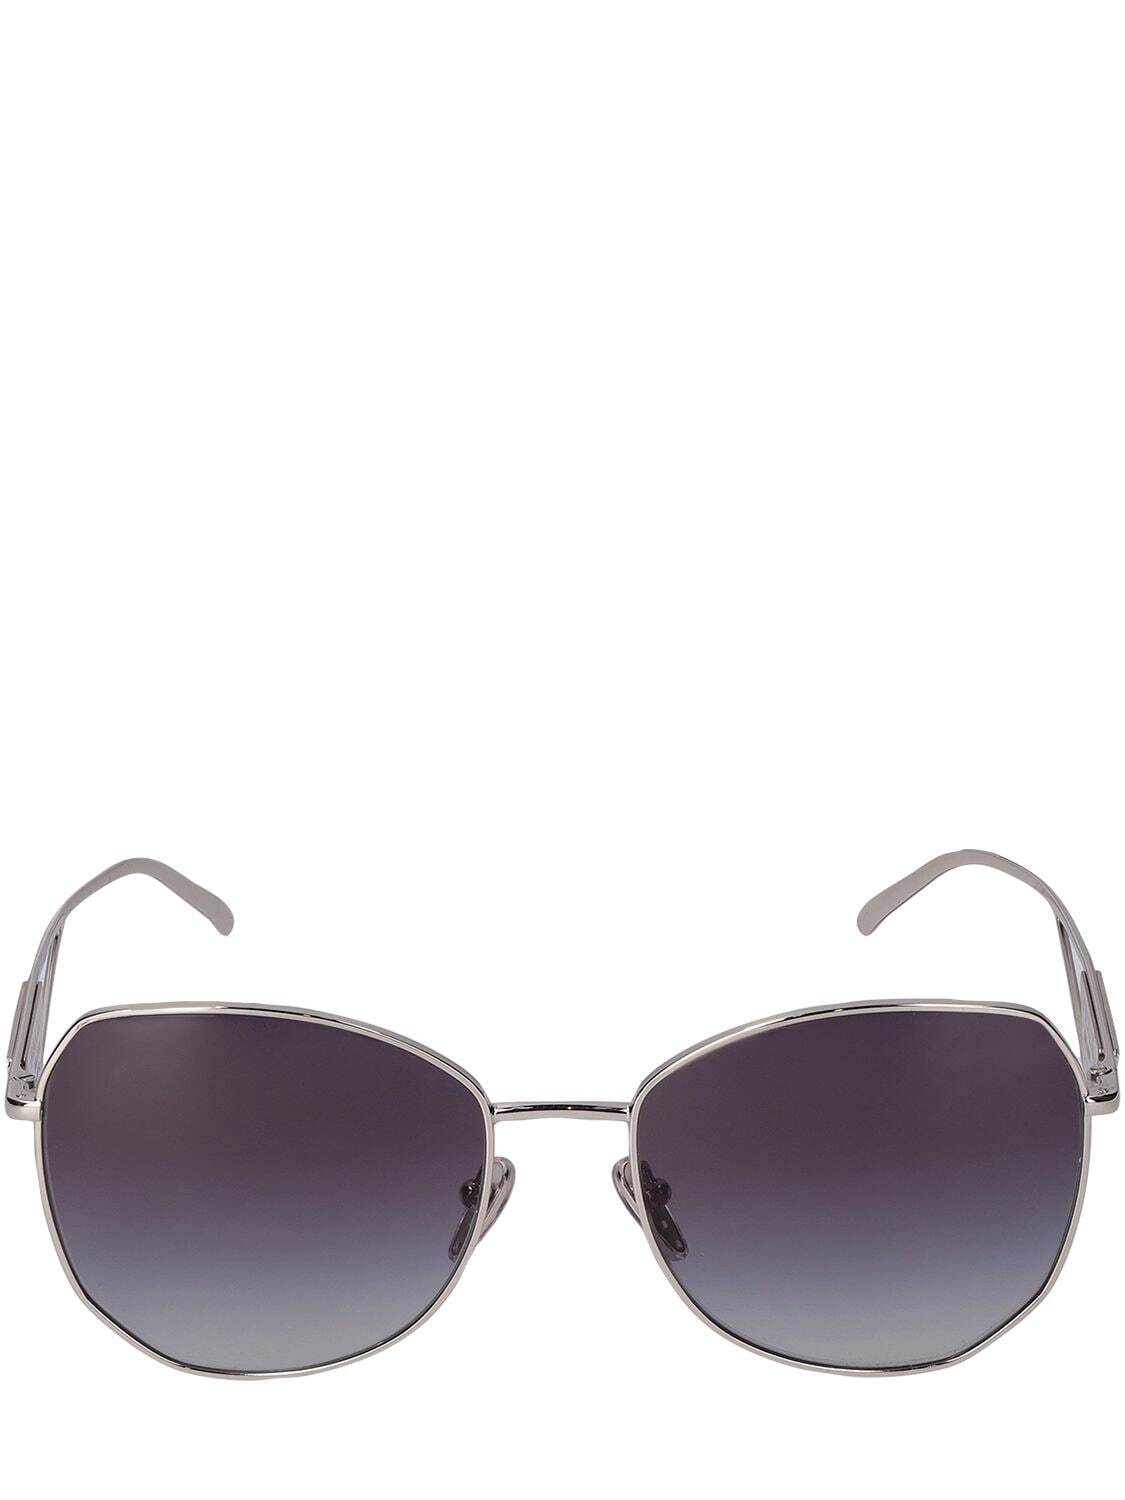 PRADA Obsesive Triangle Round Metal Sunglasses in grey / silver